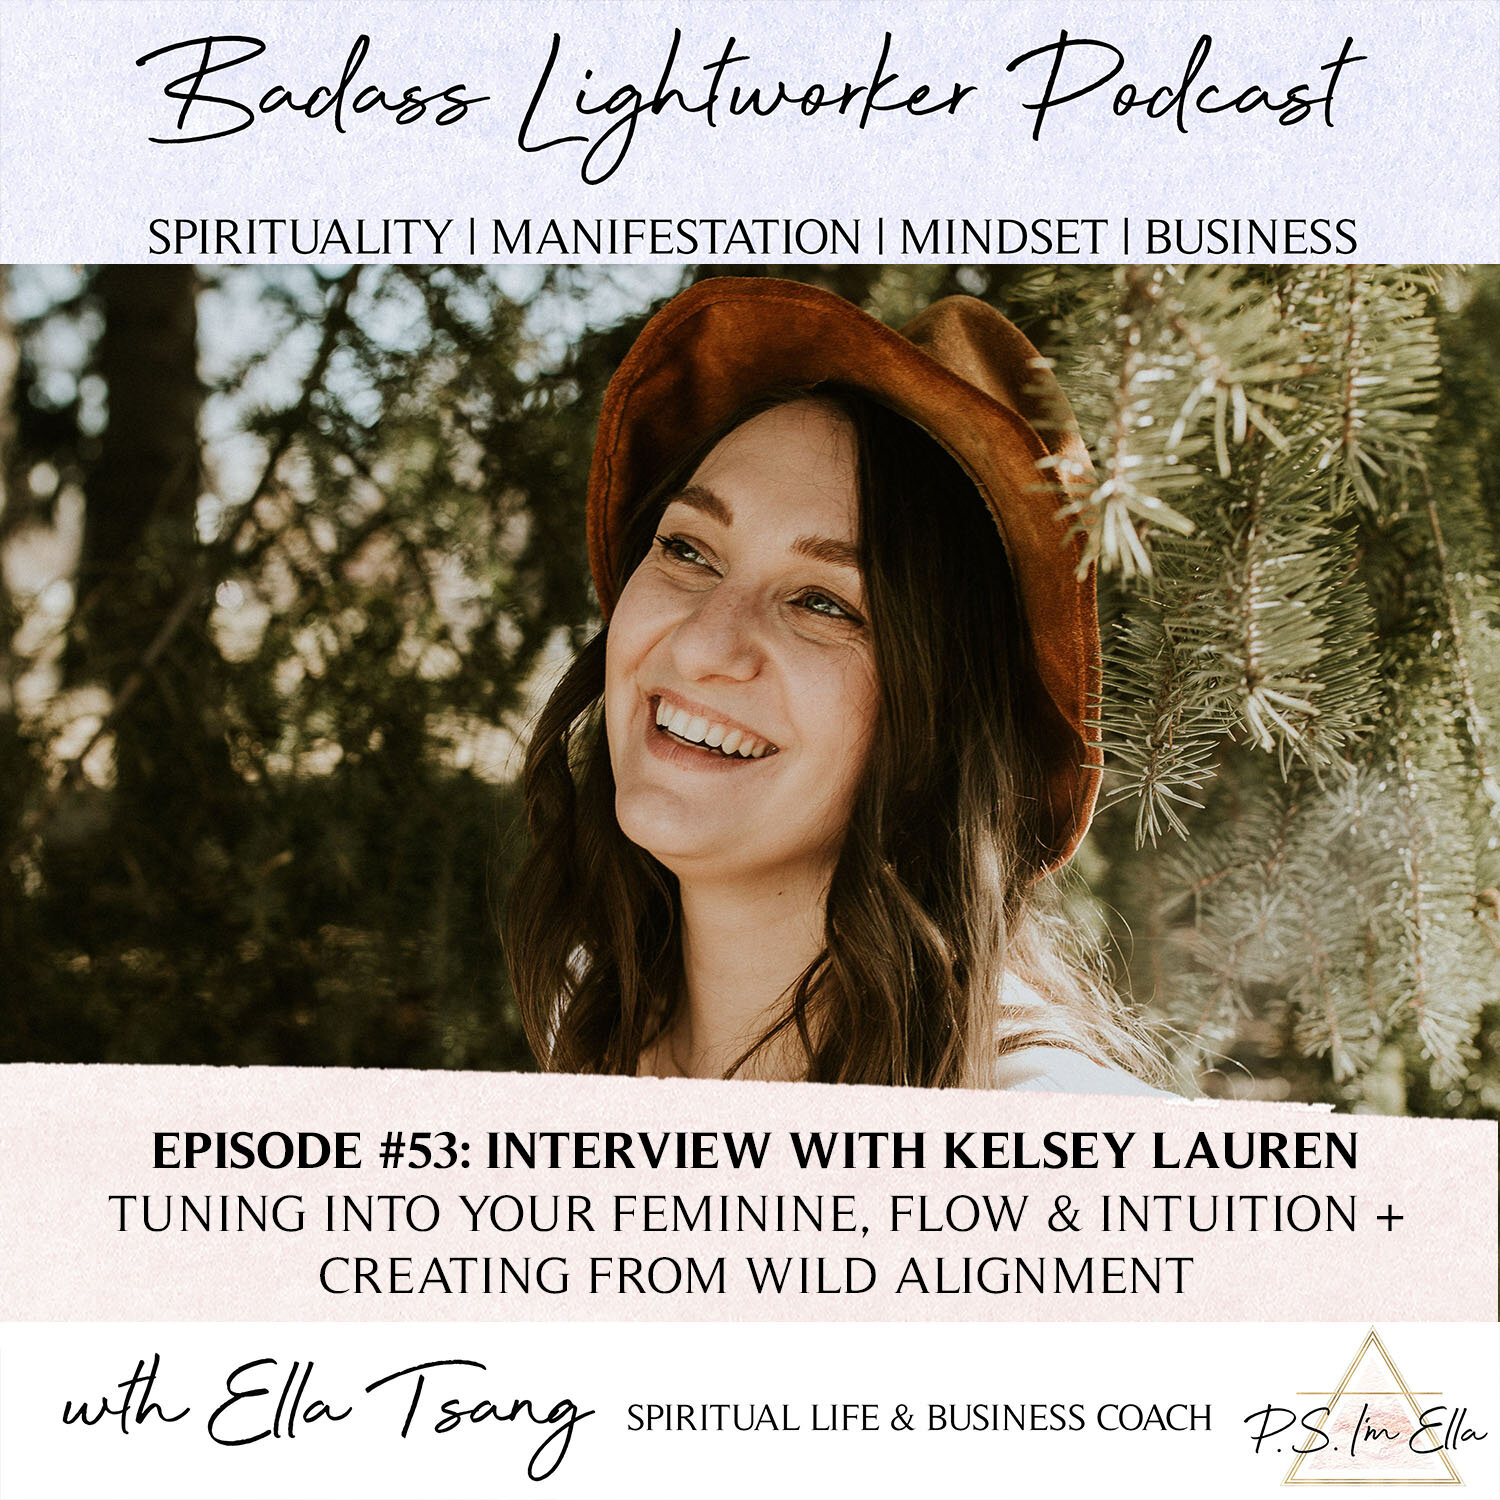 Episode #53 of the Badass Lightworker Podcast 